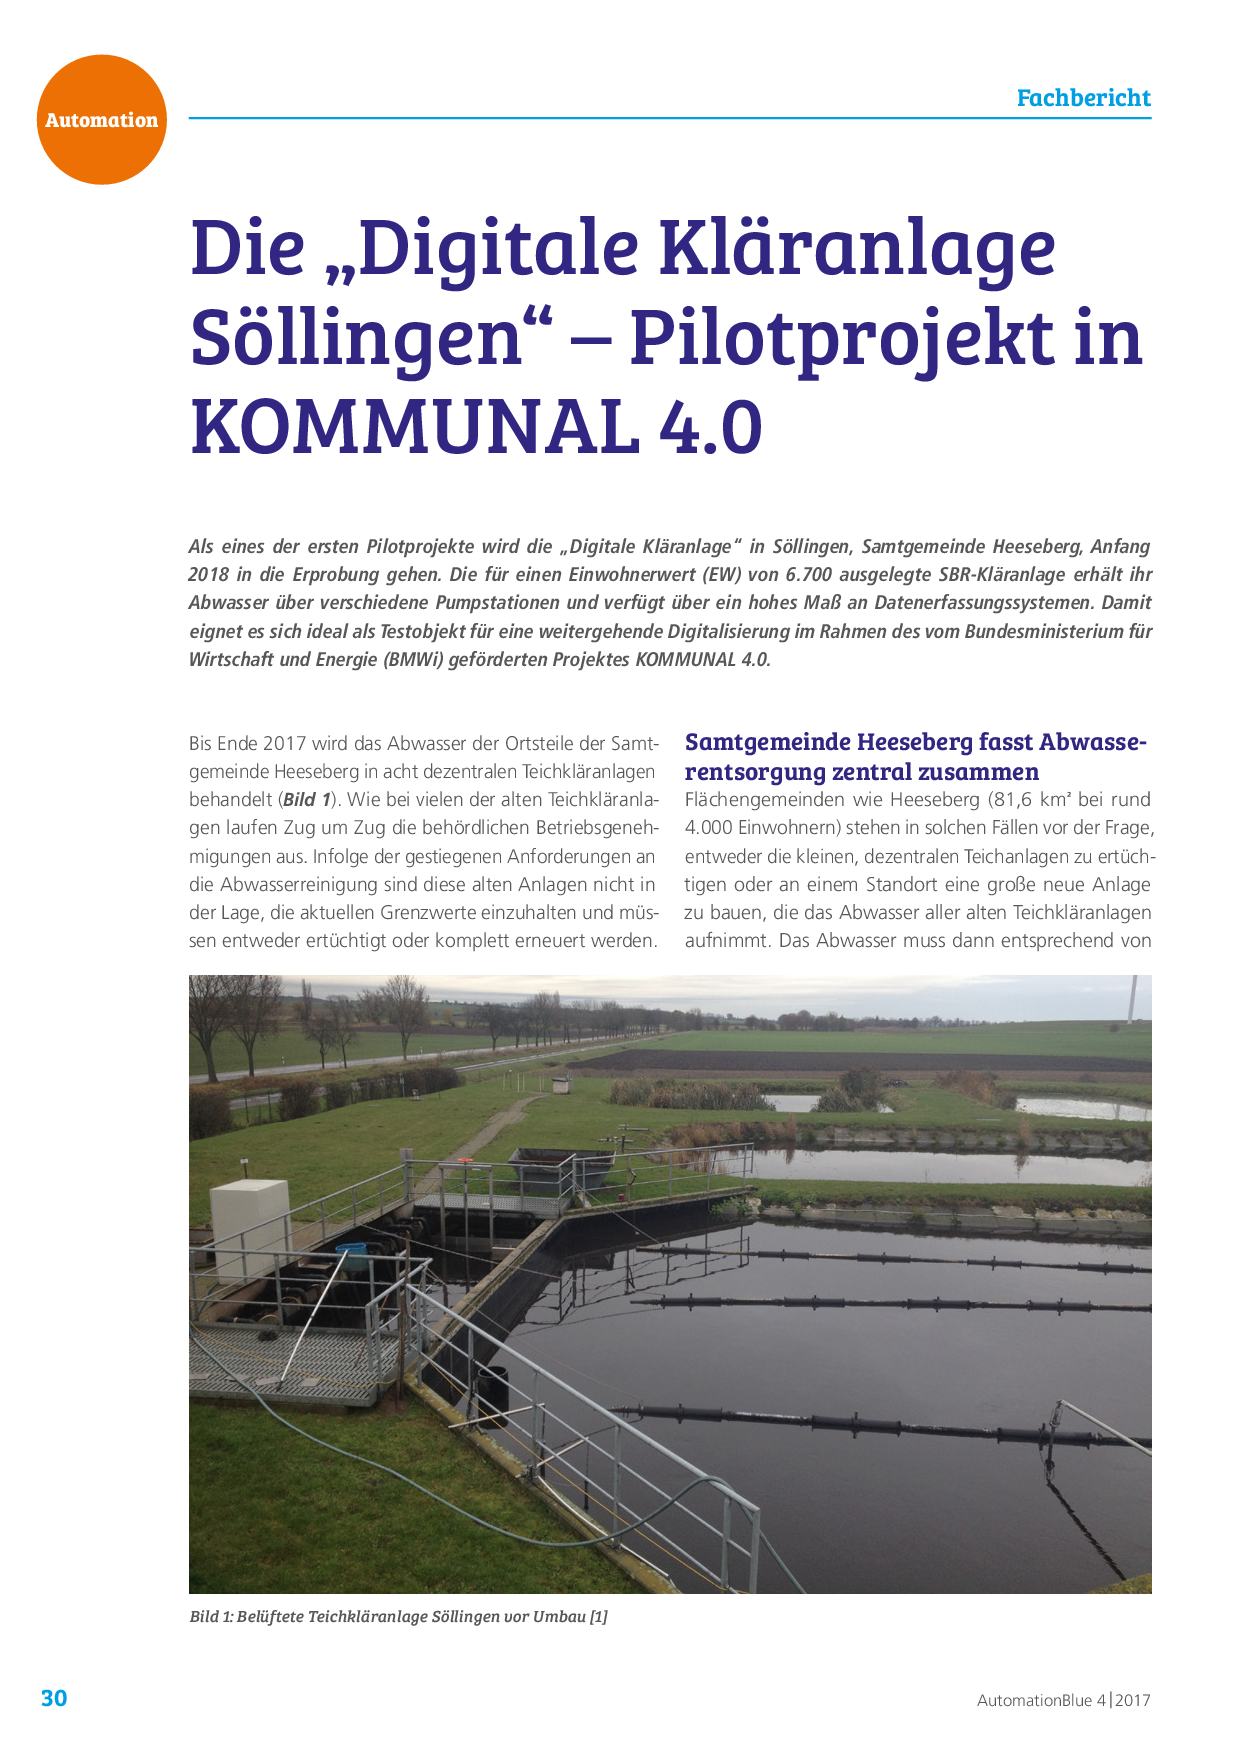 Die „Digitale Kläranlage Söllingen“ – Pilotprojekt in KOMMUNAL 4.0